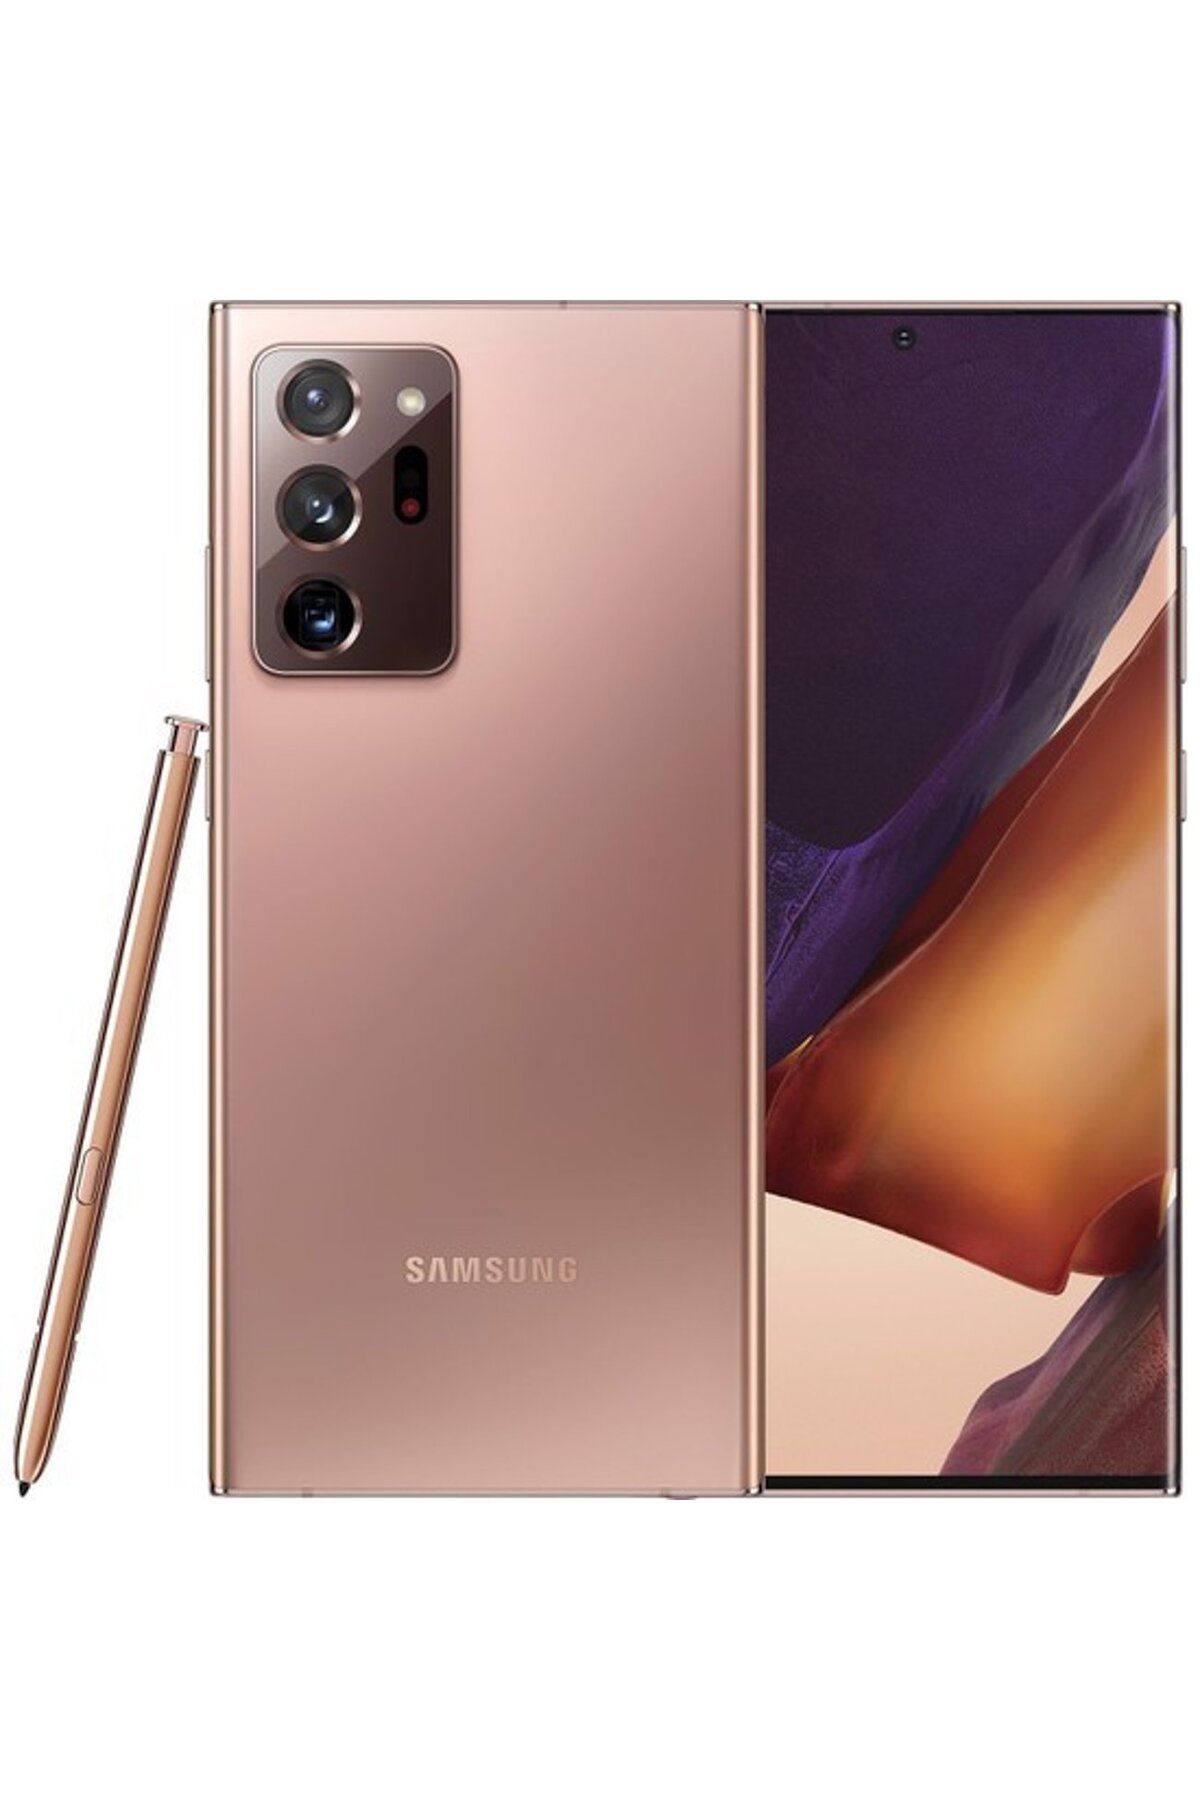 Samsung Yenilenmiş Samsung Galaxy Note 20 Ultra 256GB Bronz A Kalite